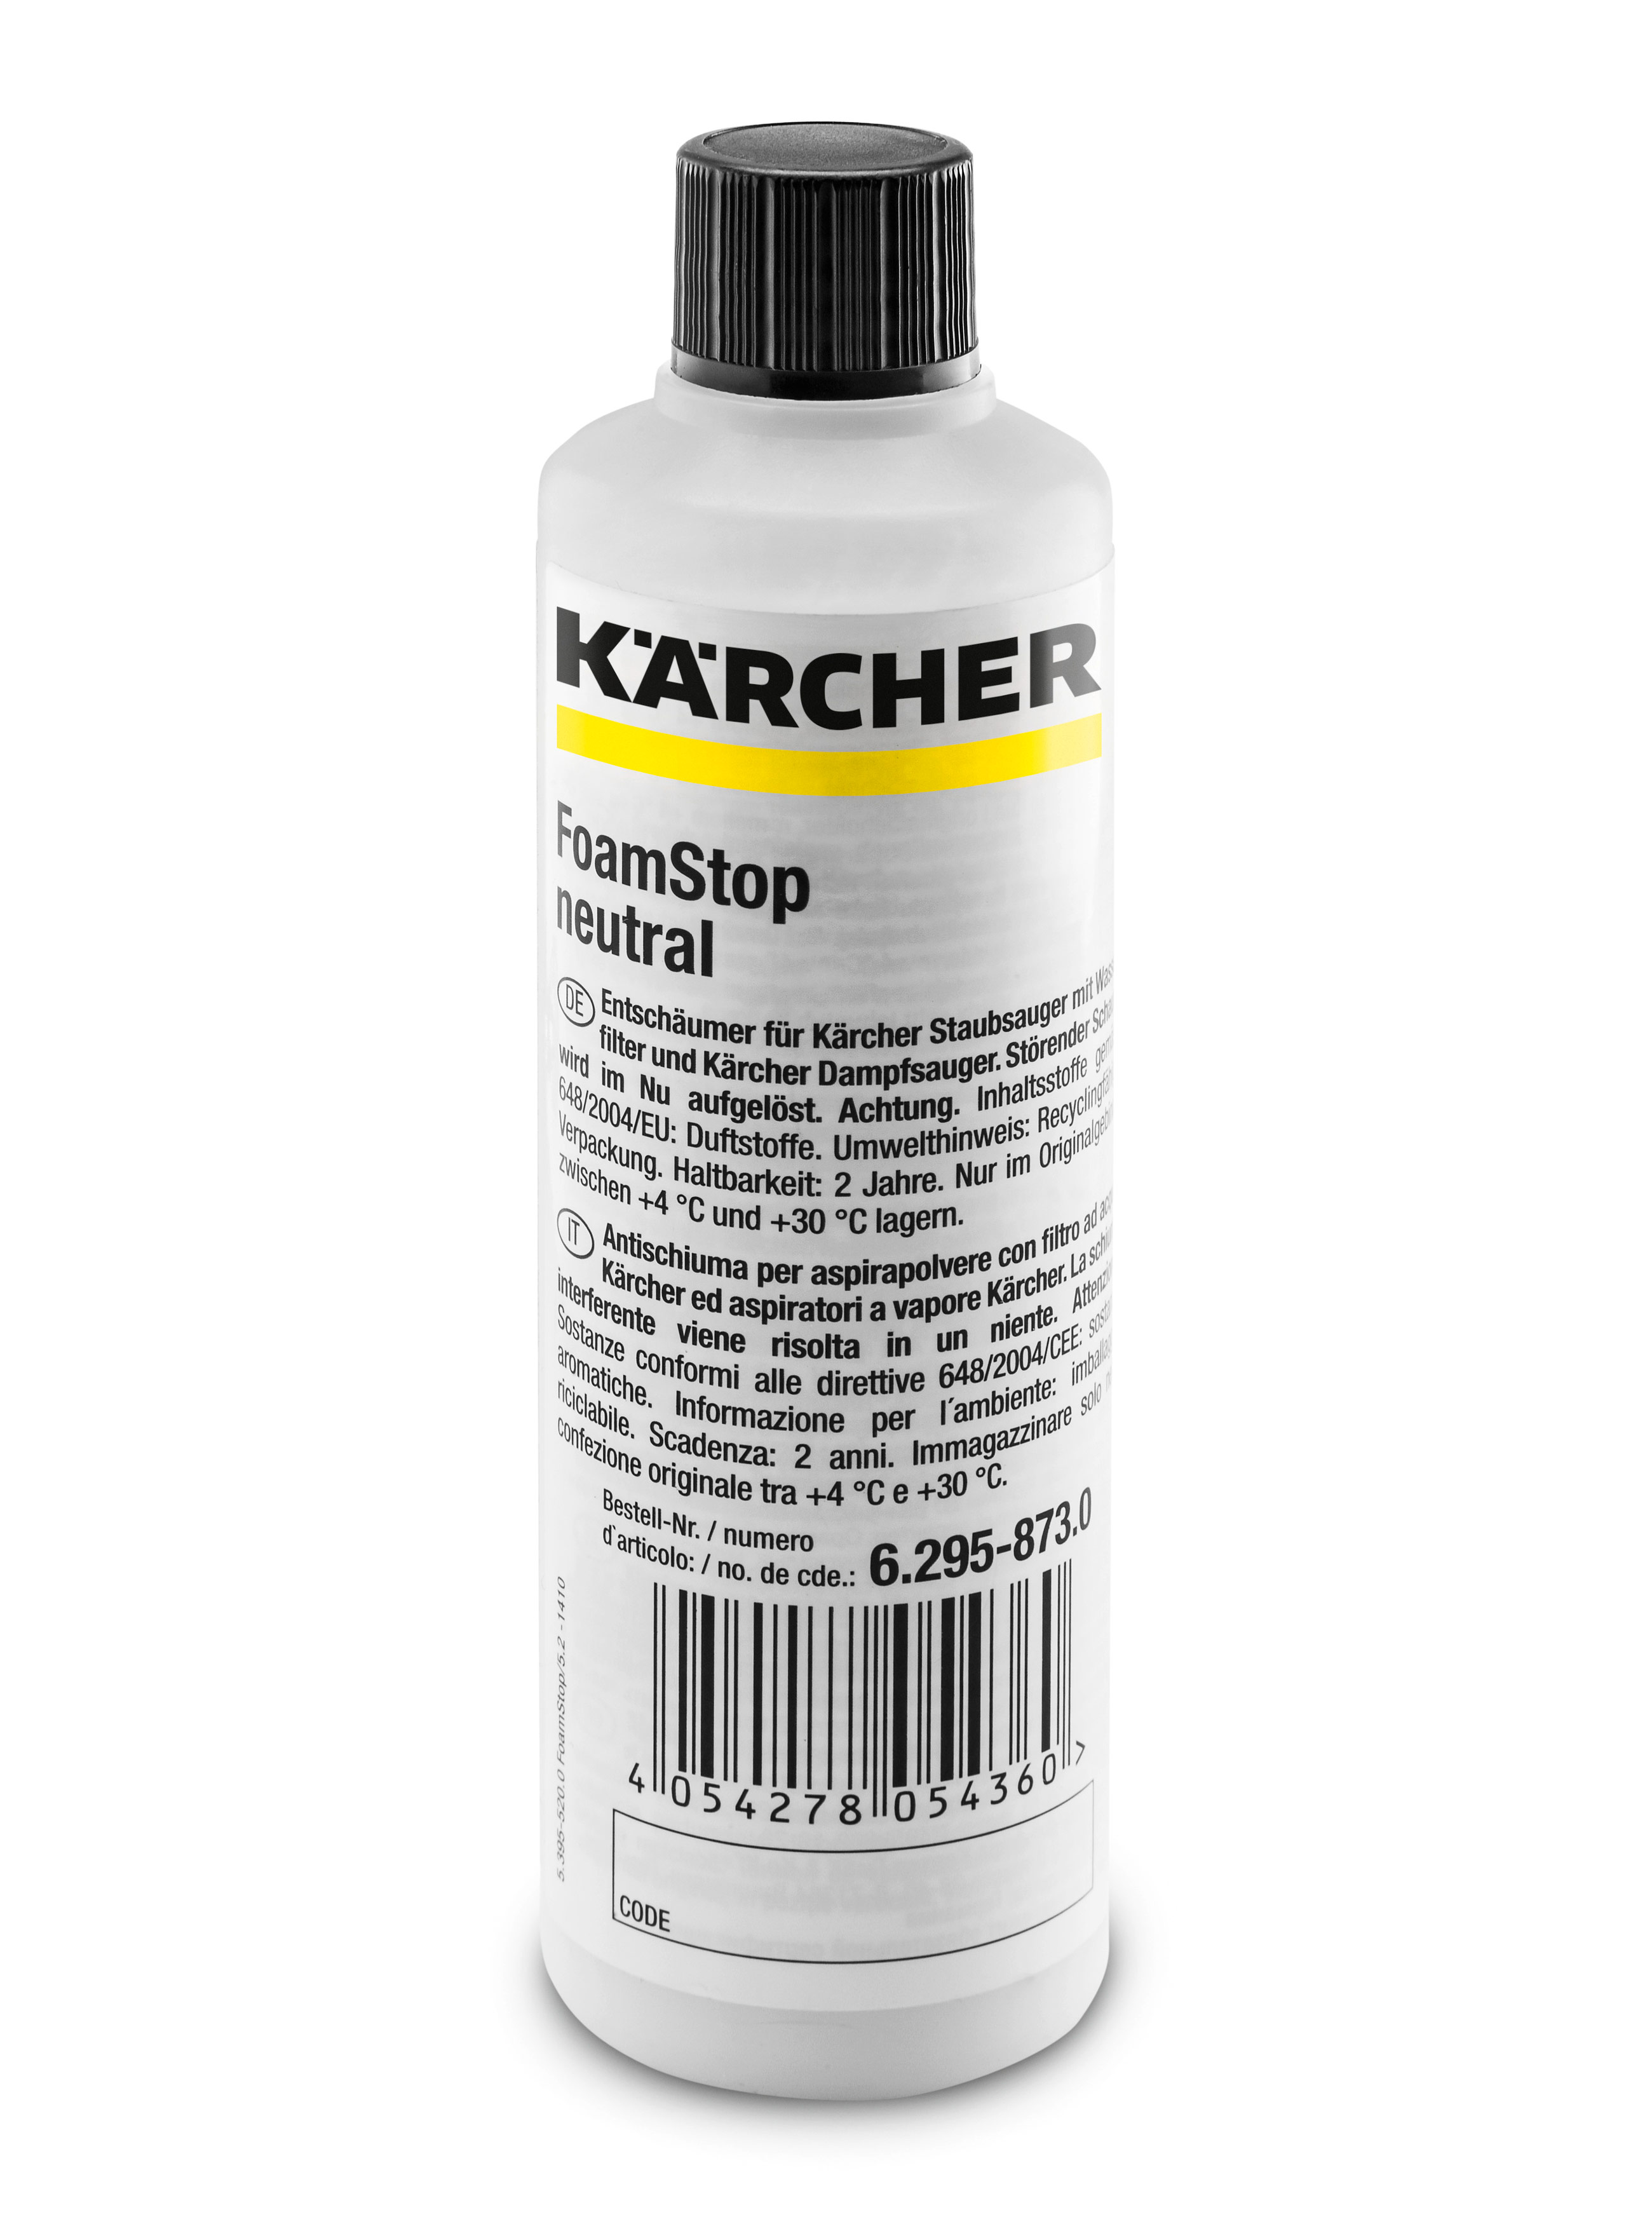 пеногаситель karcher 6 295 873 0 foam stop neutral Пеногаситель Karcher 6.295-873.0 Foam Stop Neutral